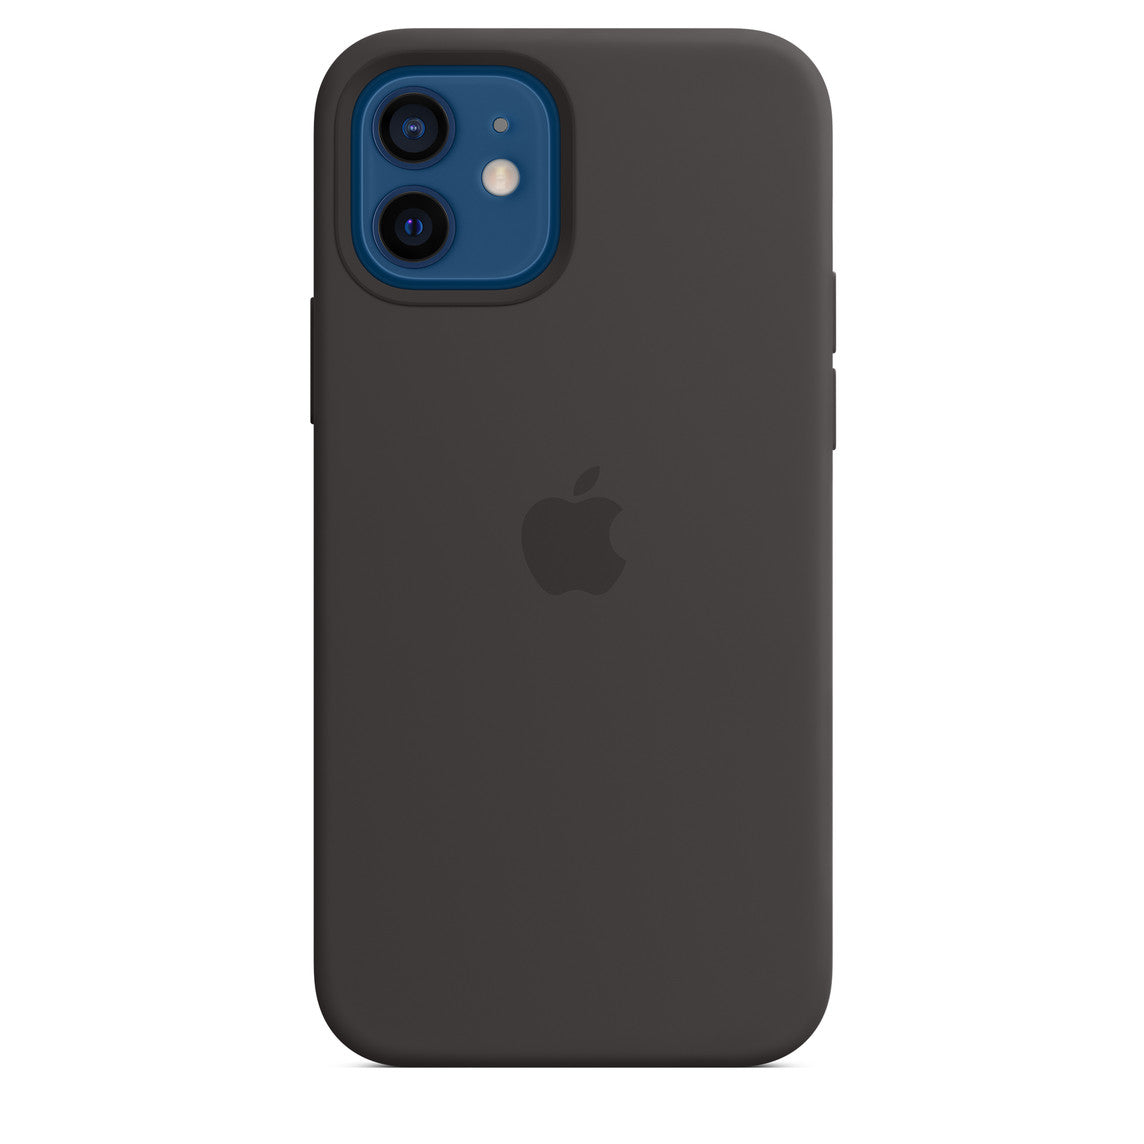 iPhone 12 Silicone Cover Original Silicone Case For Apple iPhone 12 Pro Black